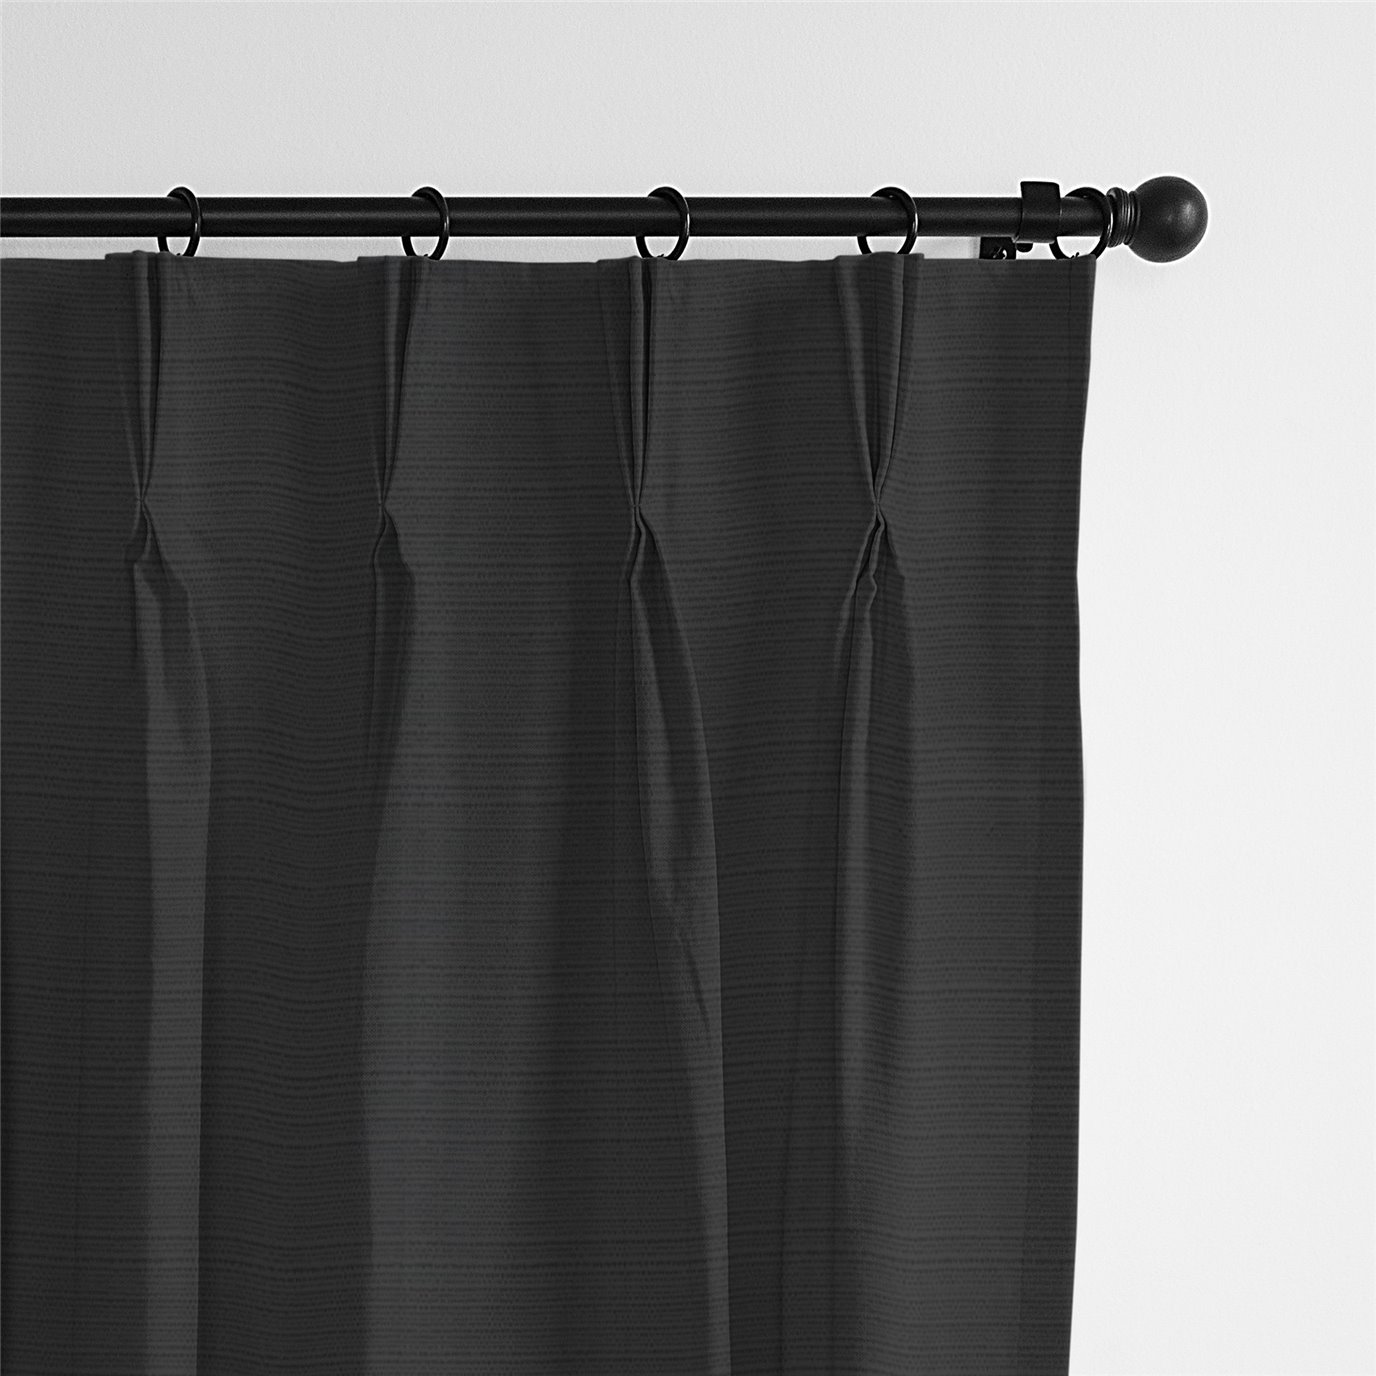 Nova Black Pinch Pleat Drapery Panel - Pair - Size 40"x96"